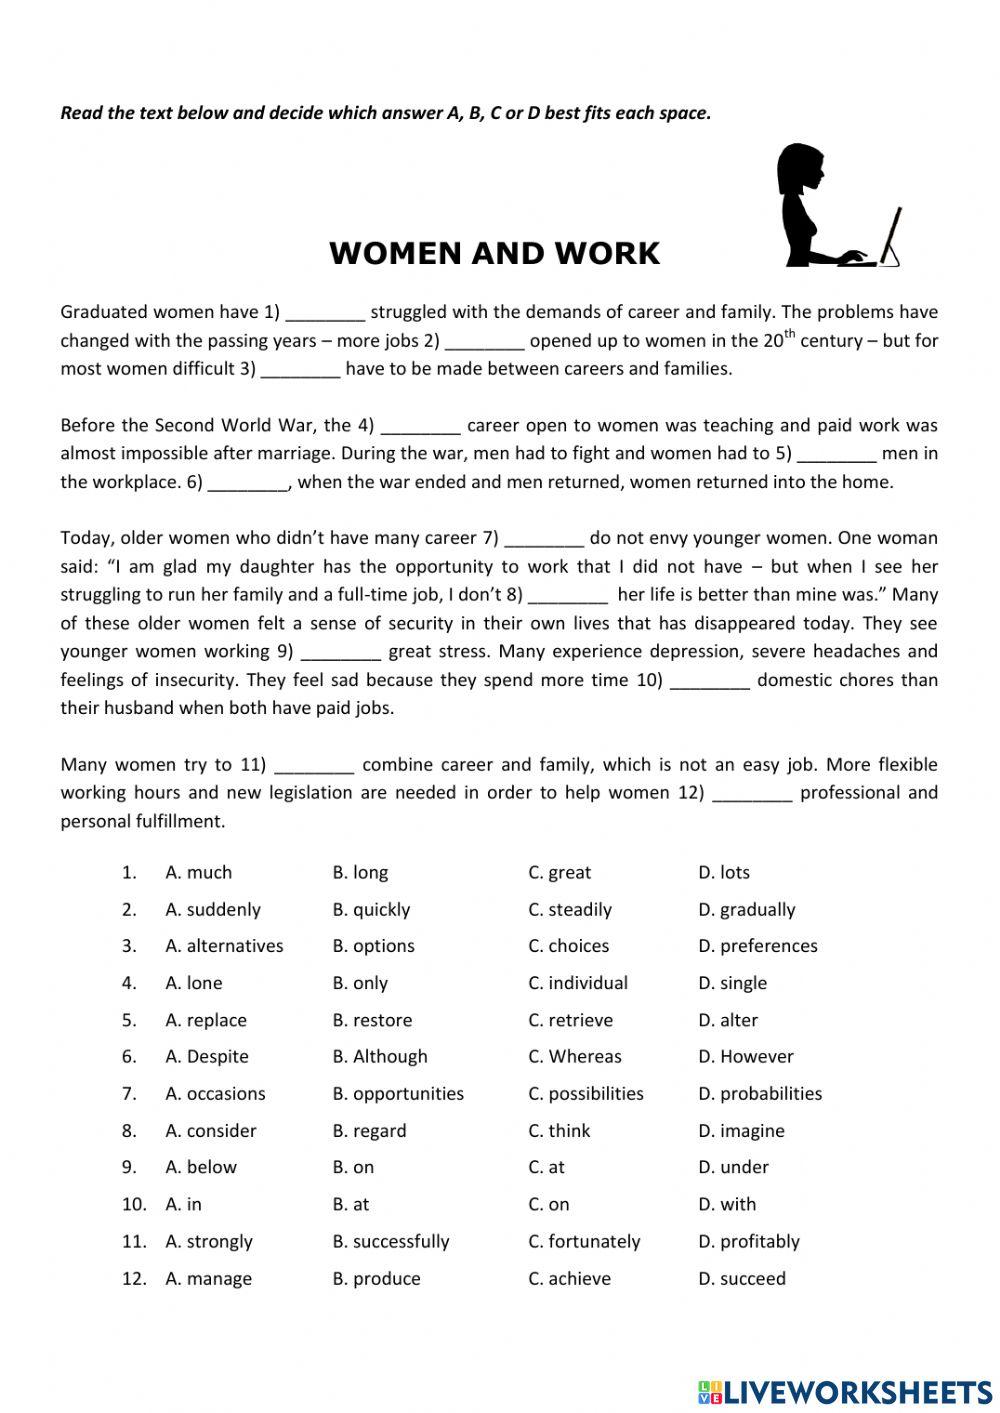 Women and work